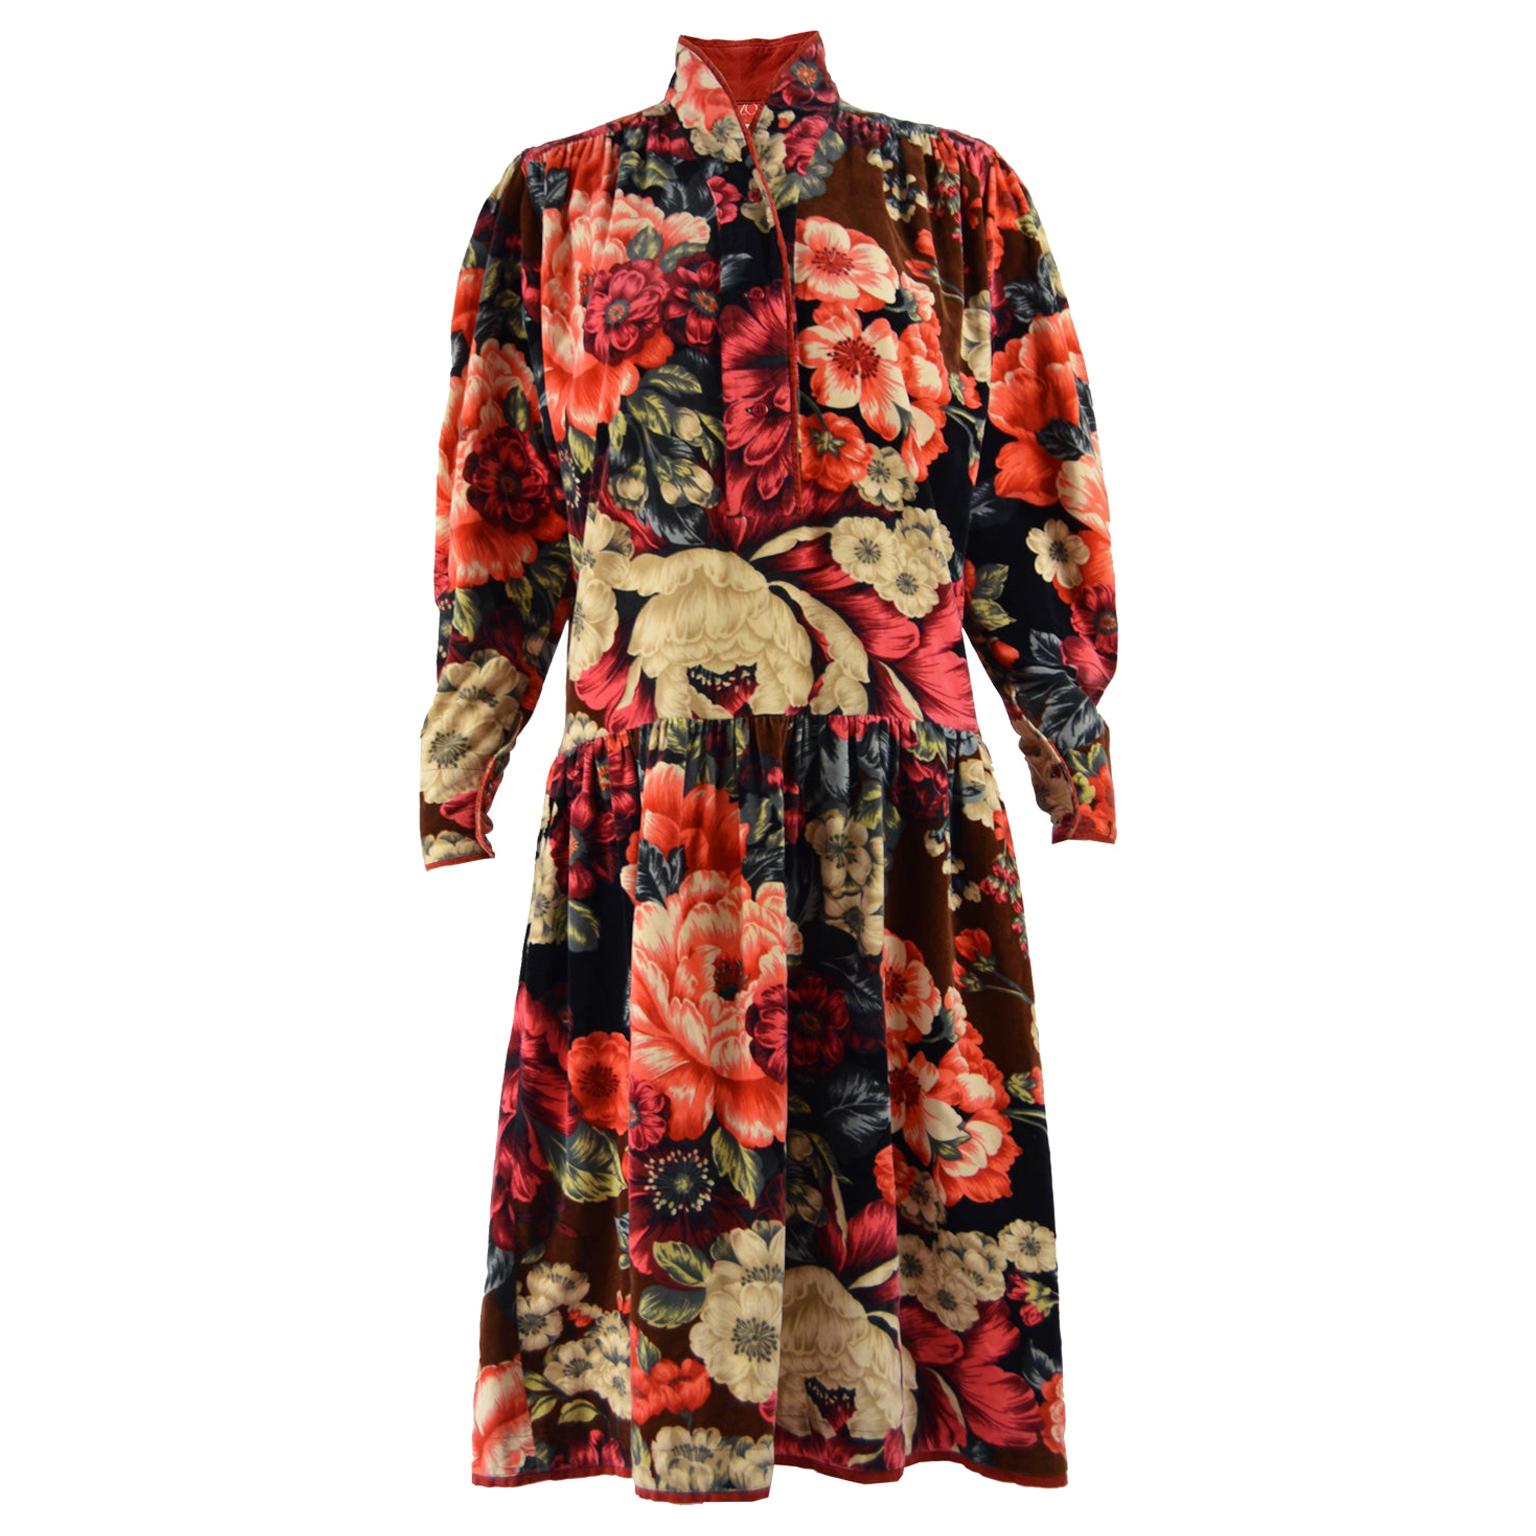 Kenzo 1970s Vintage Velvet Floral Print Dress